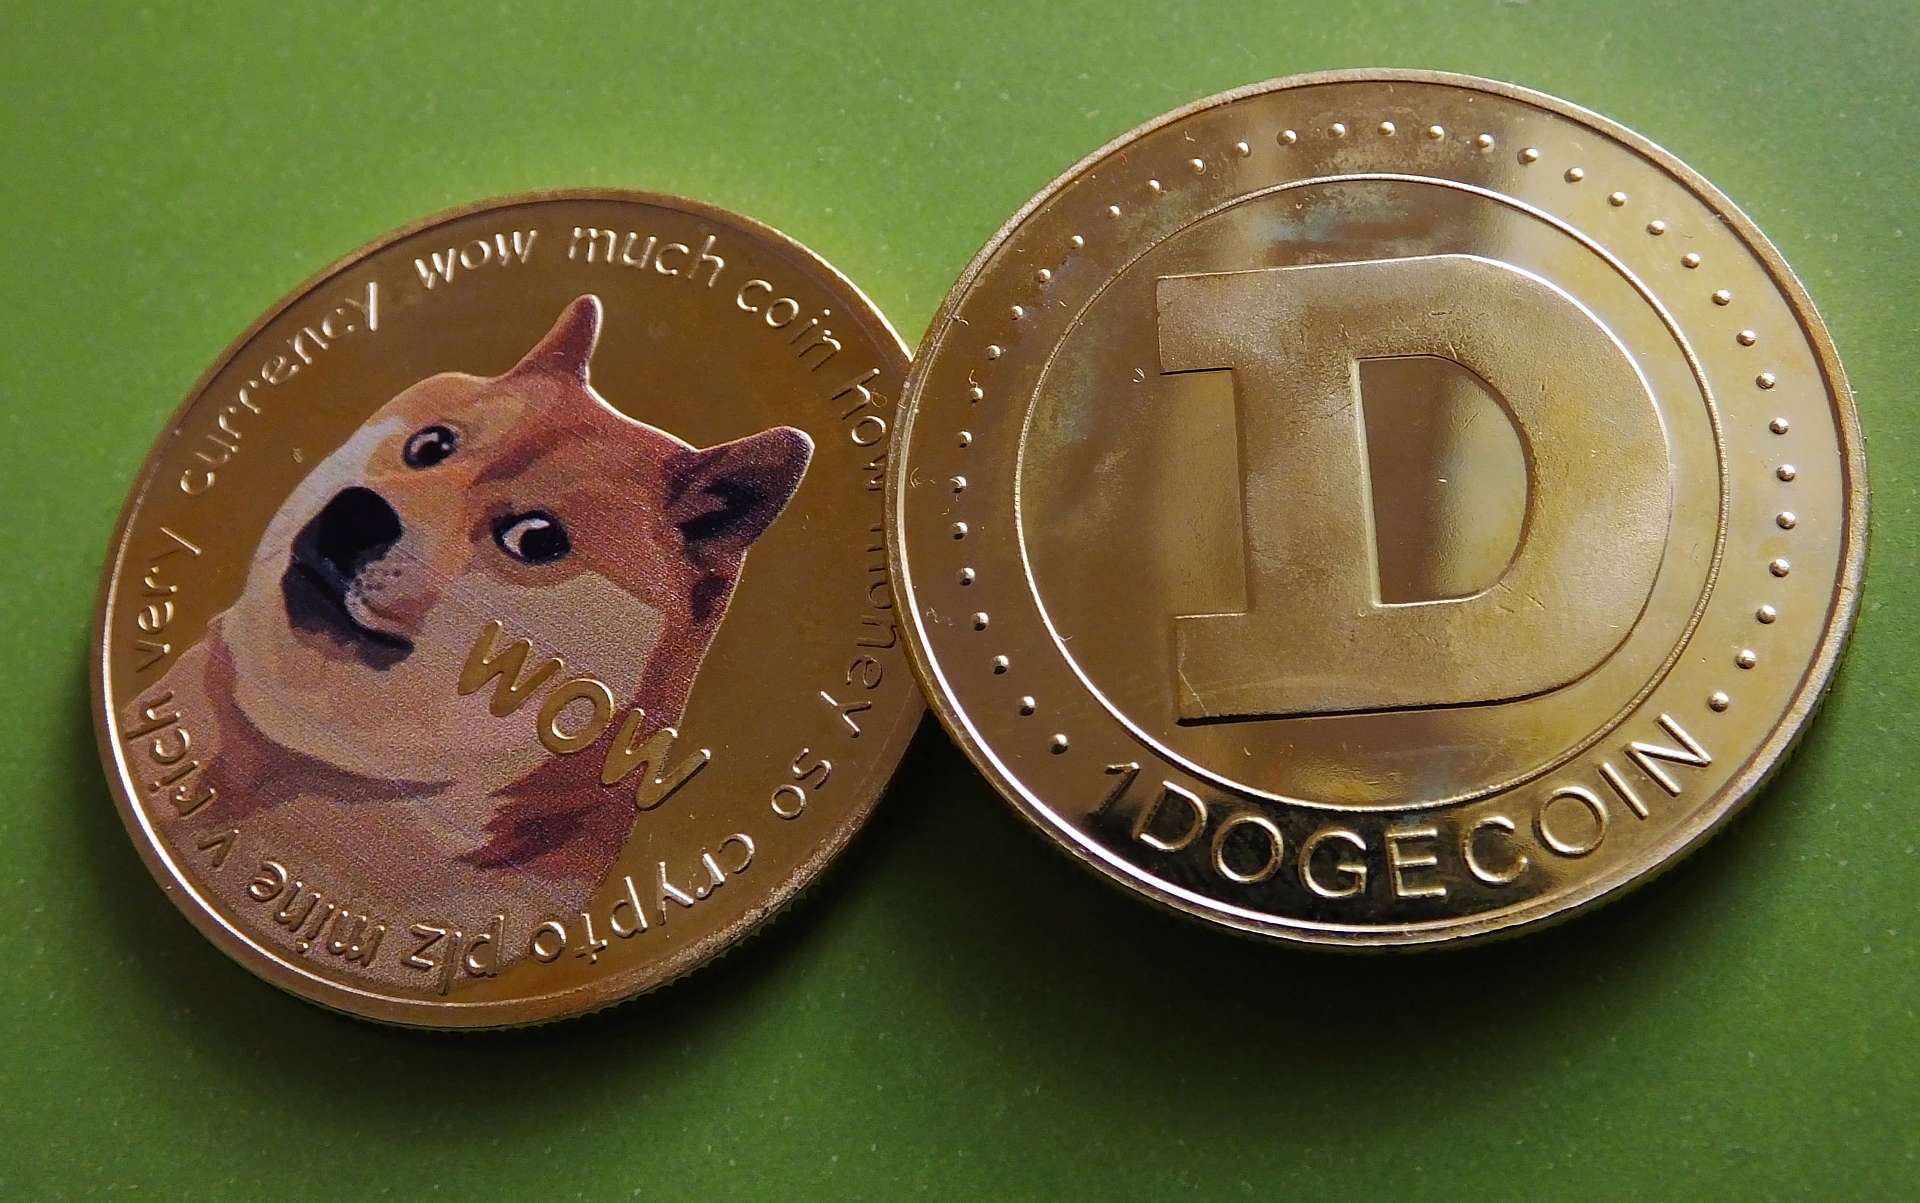 Como Dogecoin pode se tornar a moeda da internet?